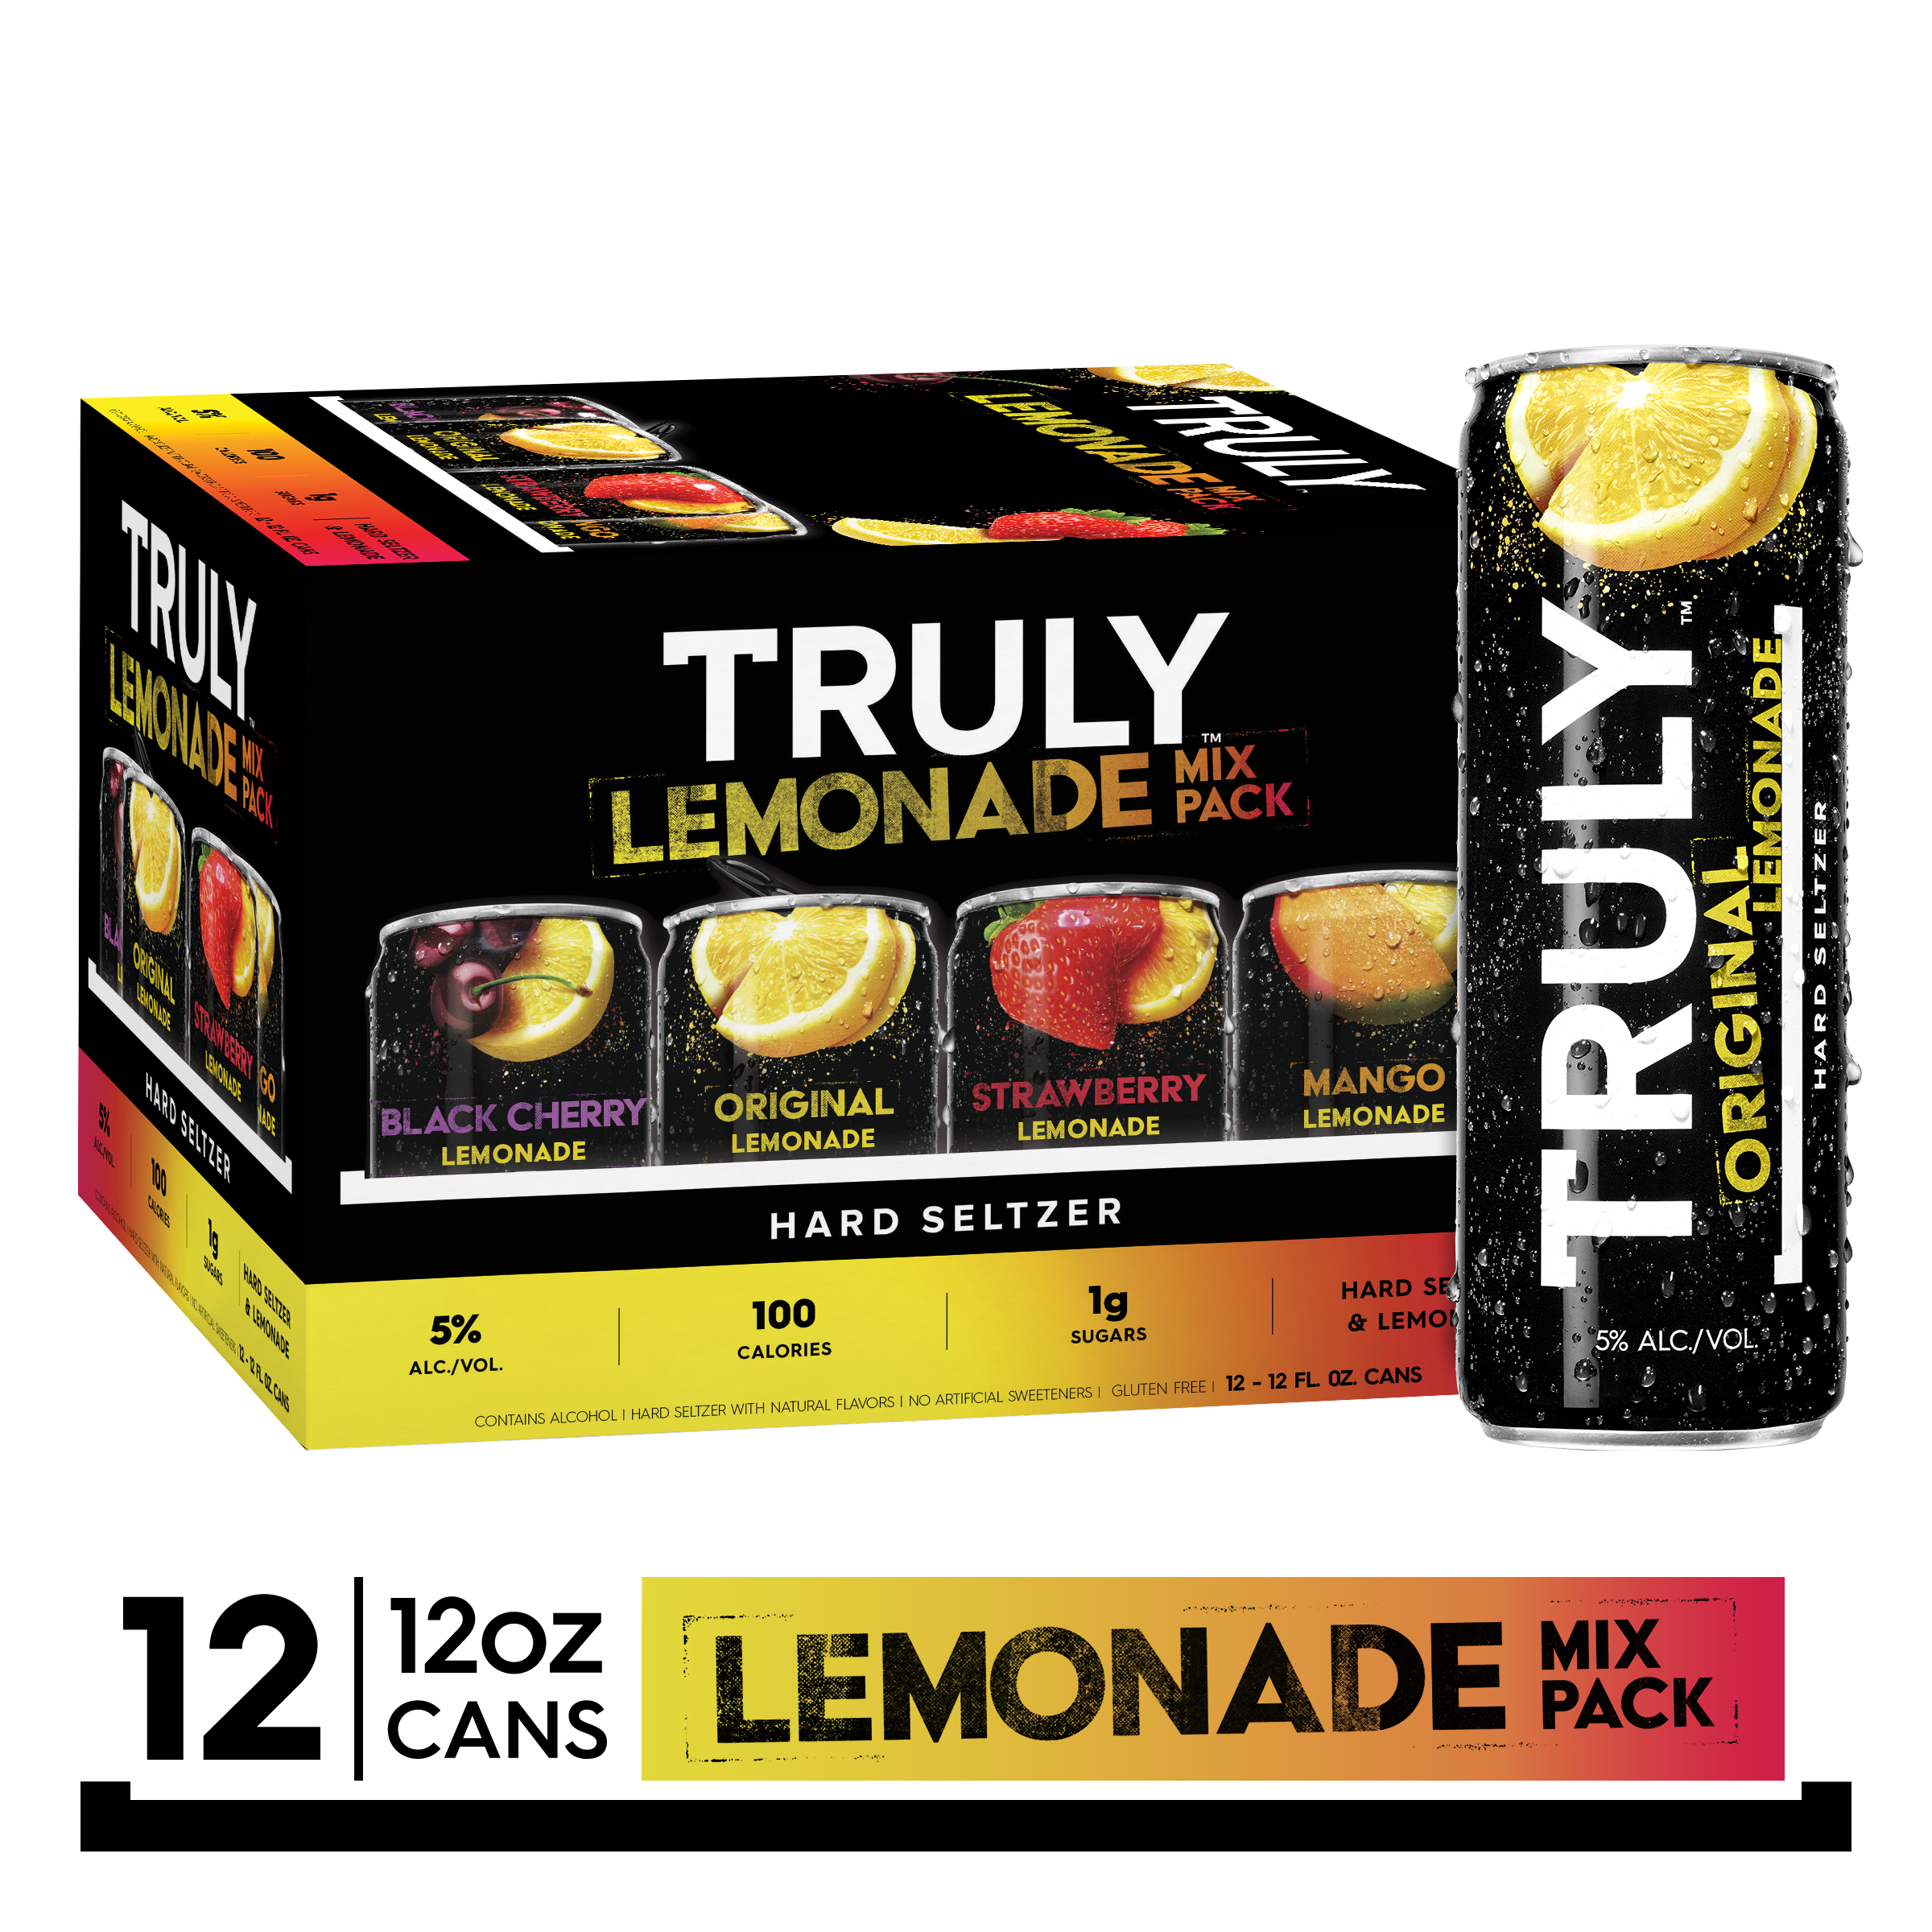 TRULY Lemonade Hard Seltzer Variety, 12 PACK, 12oz beer ...